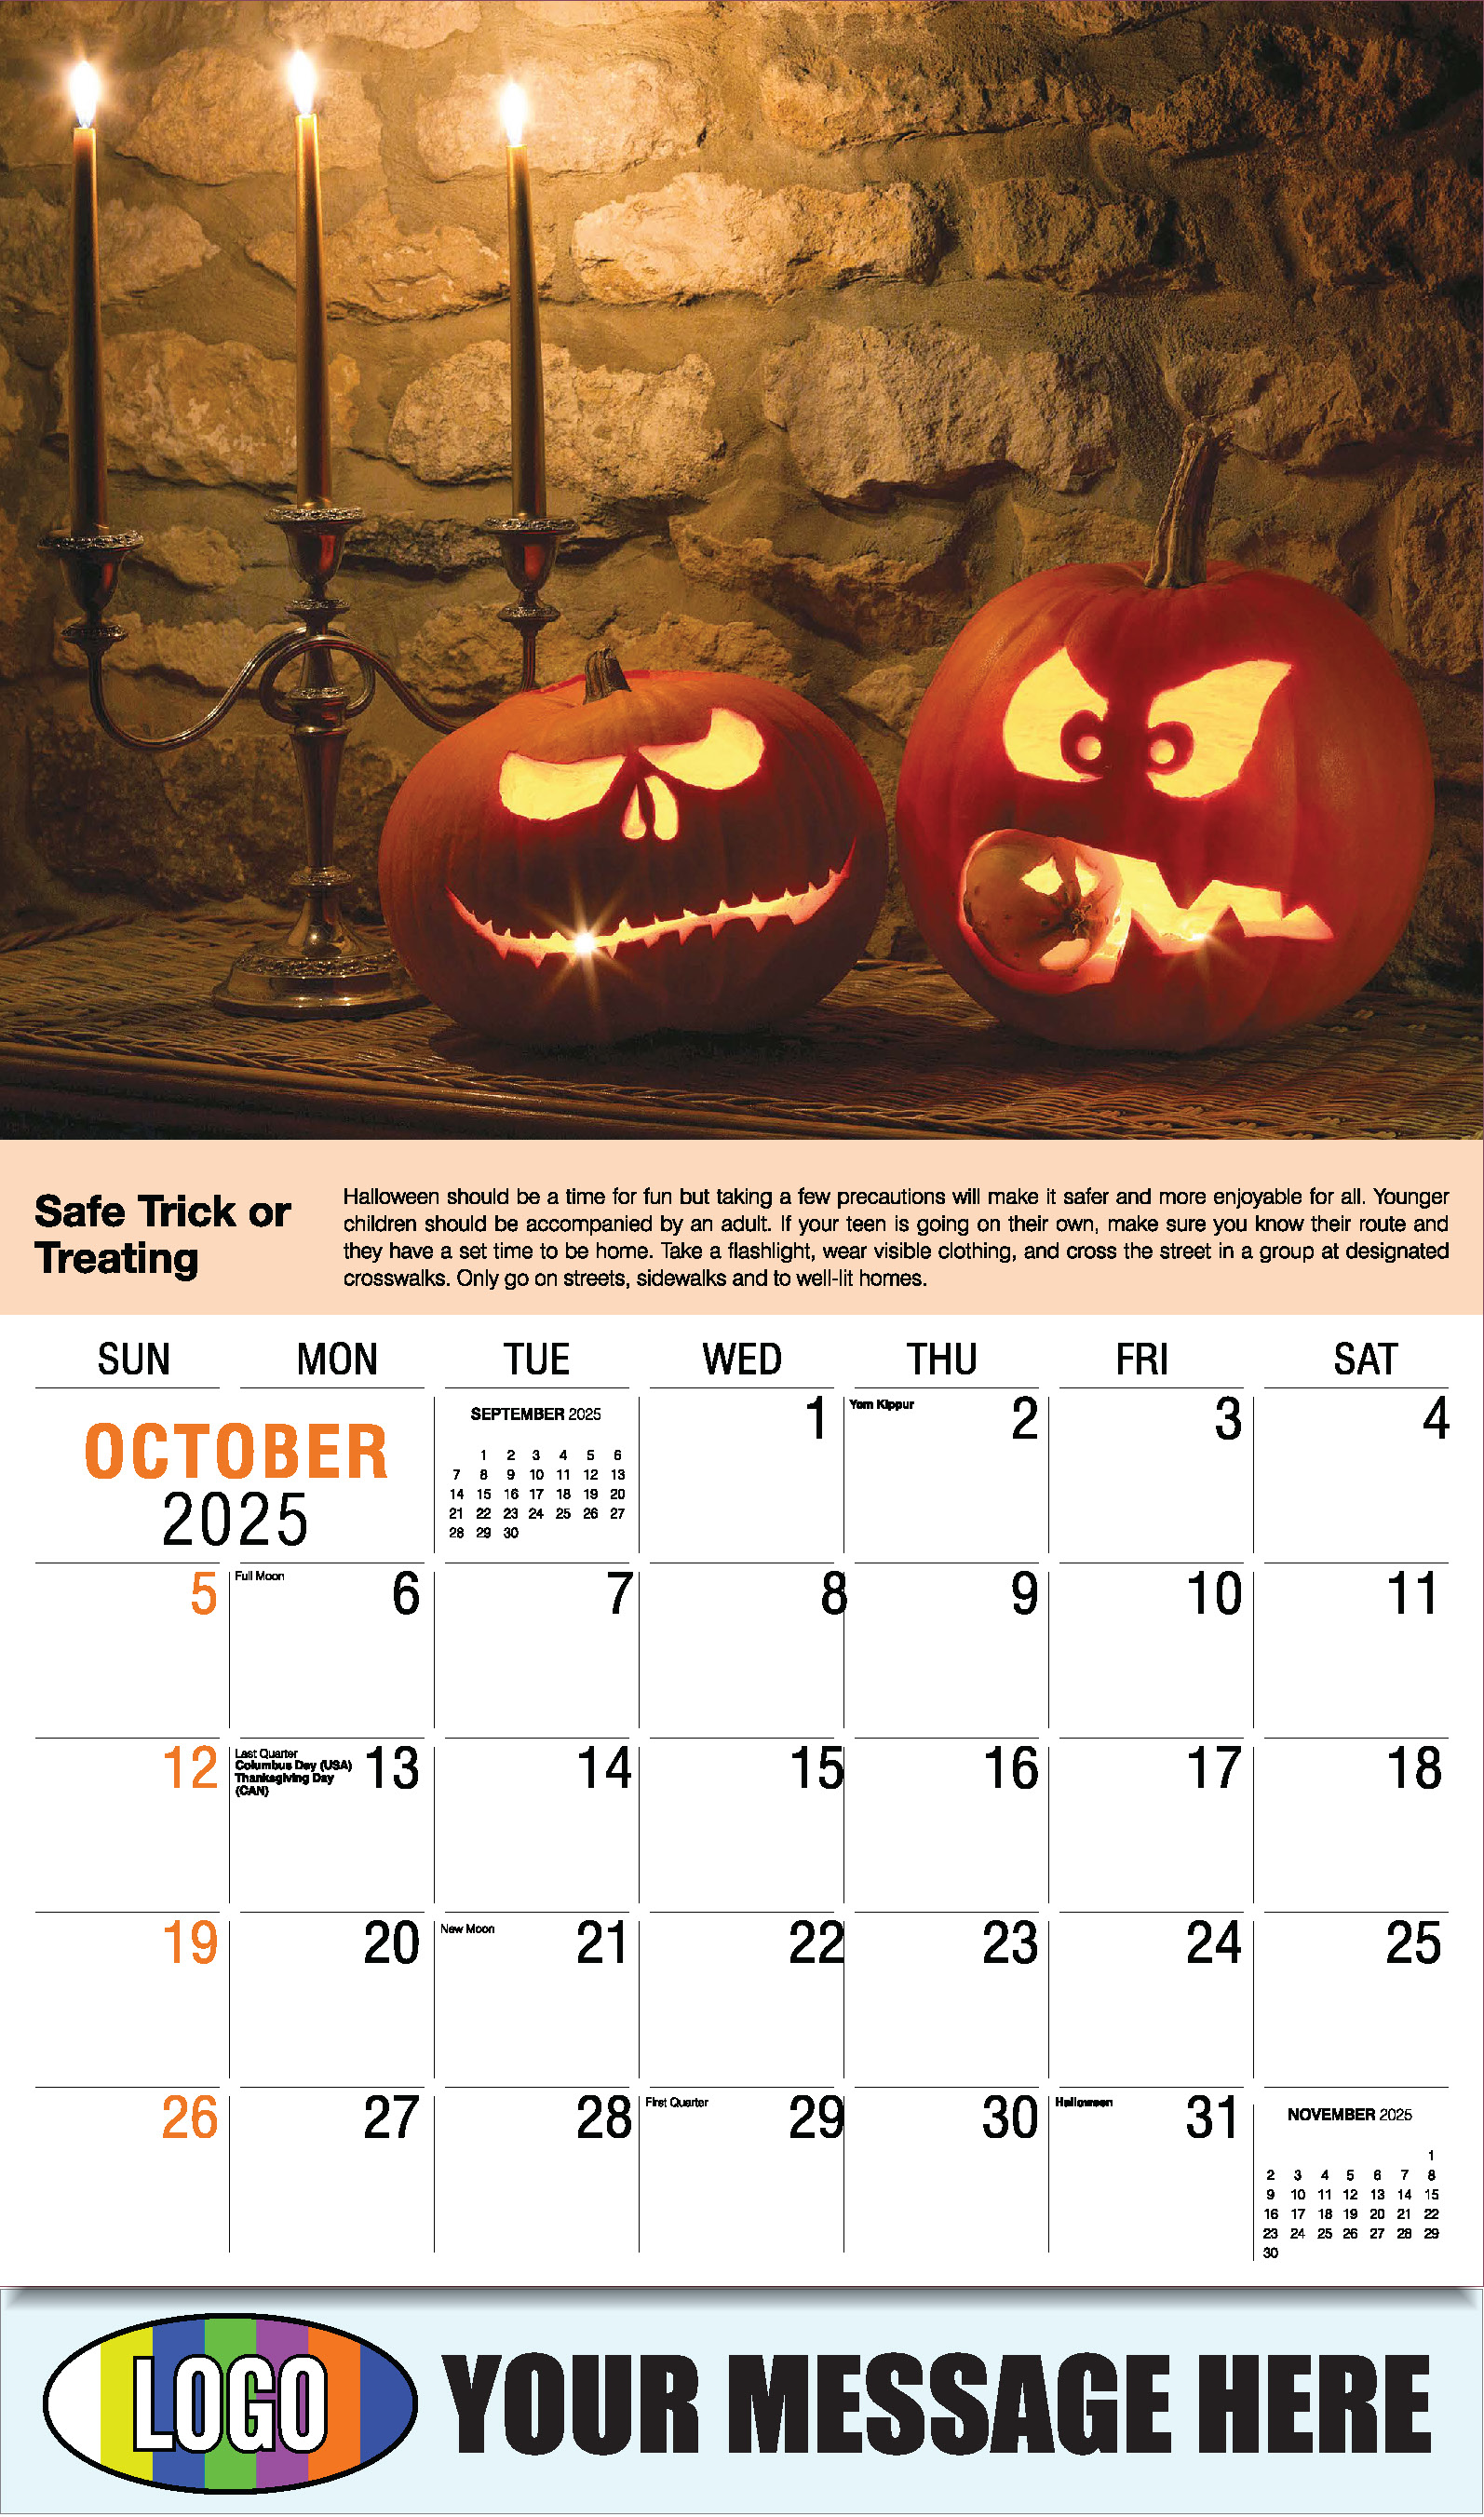 Health Tips 2025 Business Promo Wall Calendar - October